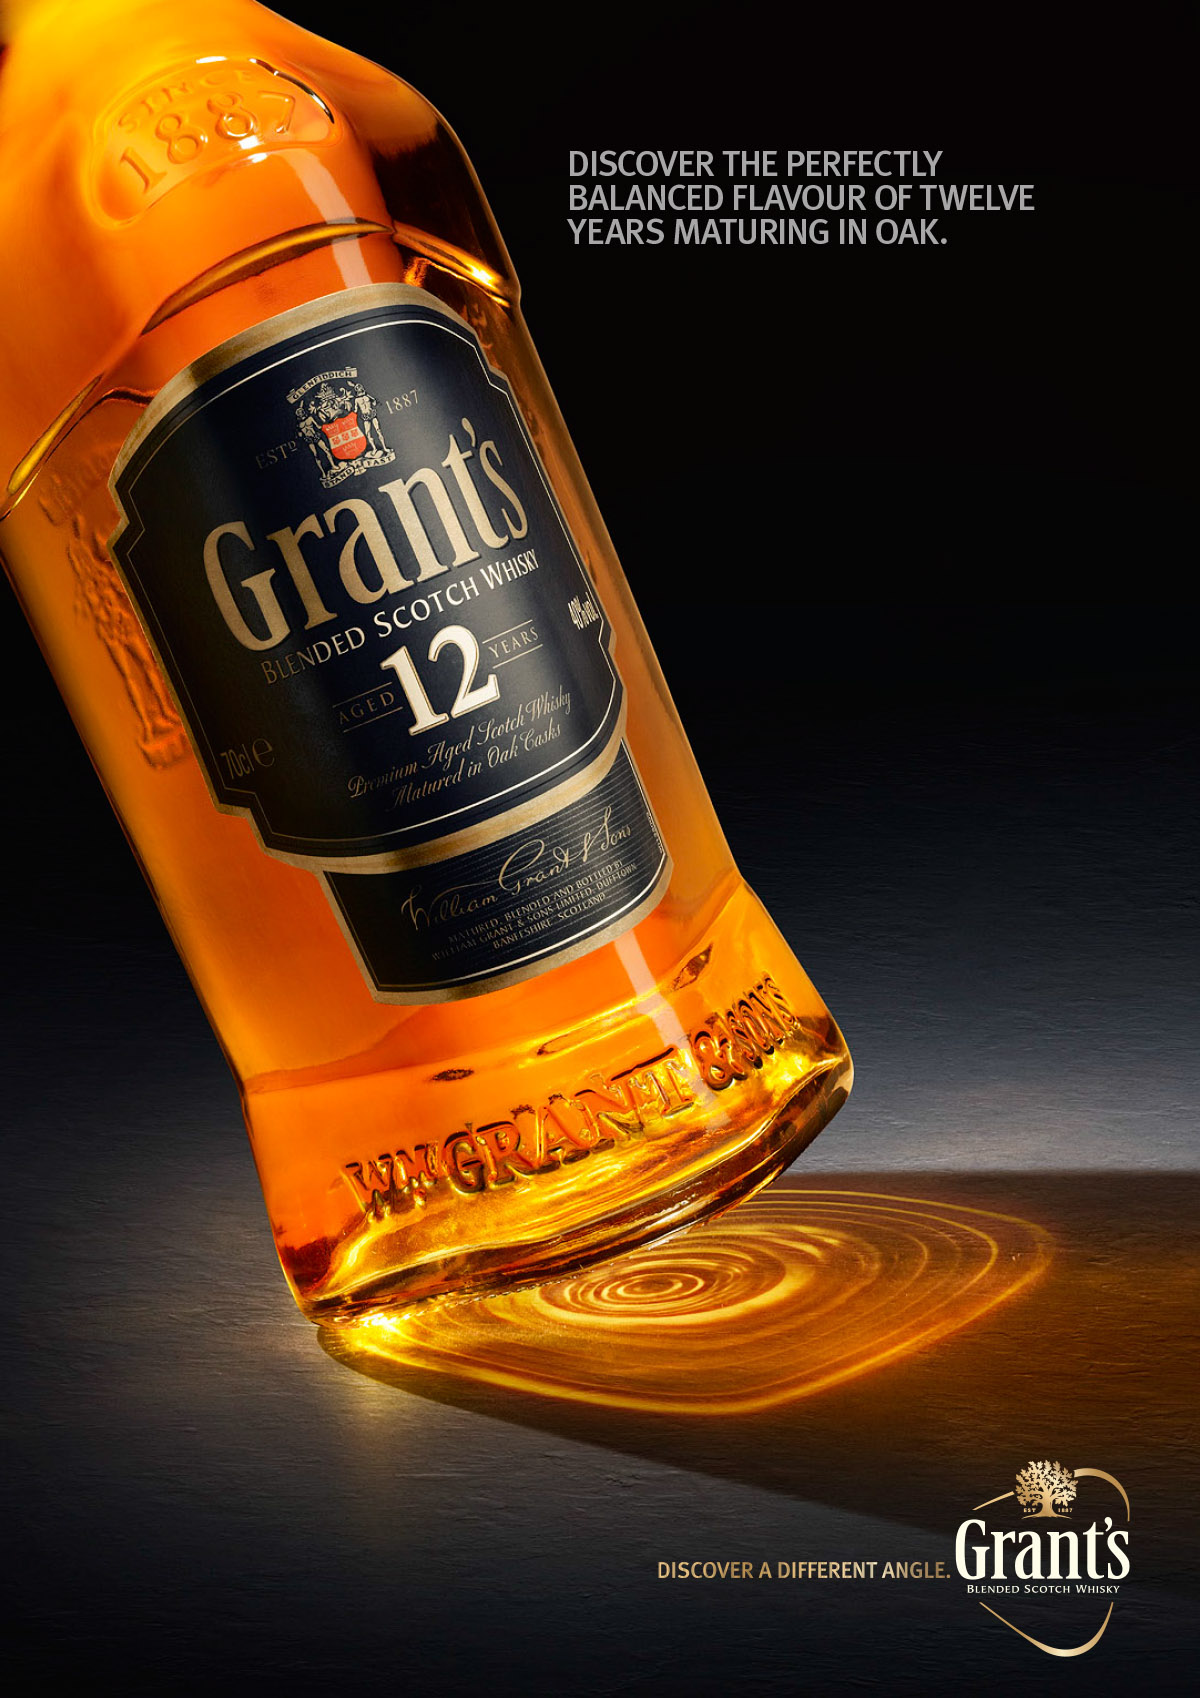 Adobe Portfolio Grants 12 whisky luke white grants whisky  whisky ads  jonathan Knowles TAYLOR JAMES premium drinks liquids